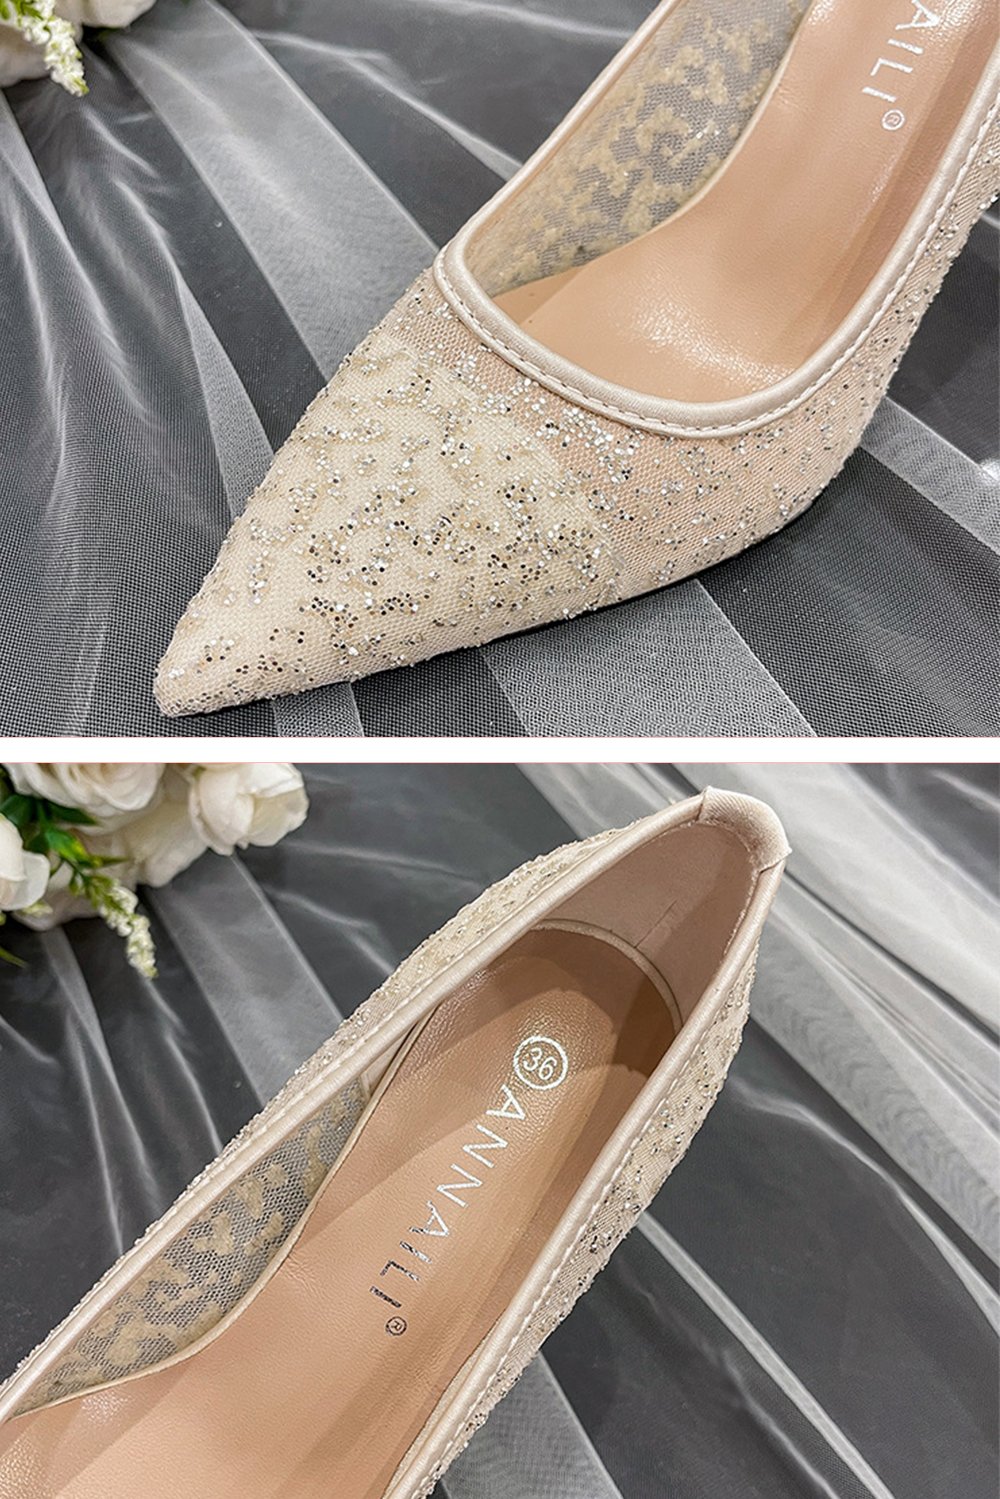 Stiletto Heel 8cm Tulle Heels Bridal Shoes CK0108